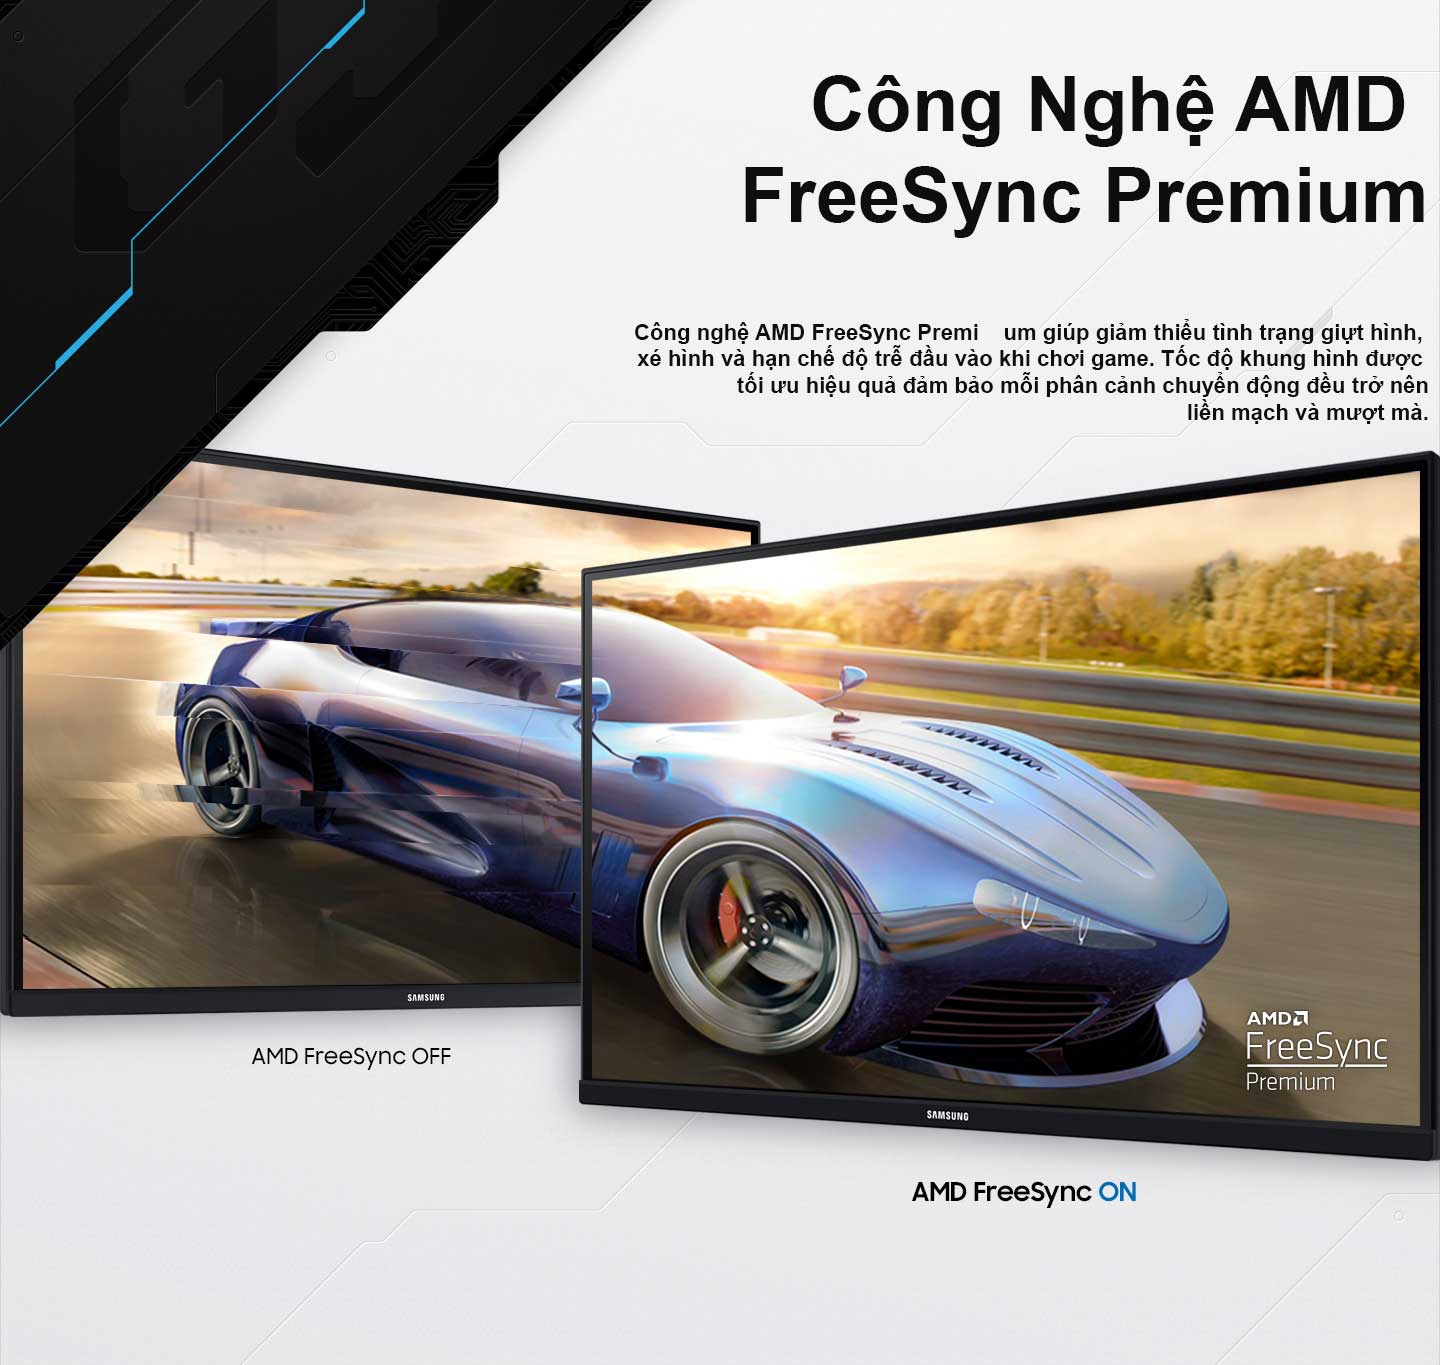 vn-feature-amd-freesync-premium-412141205.jpg